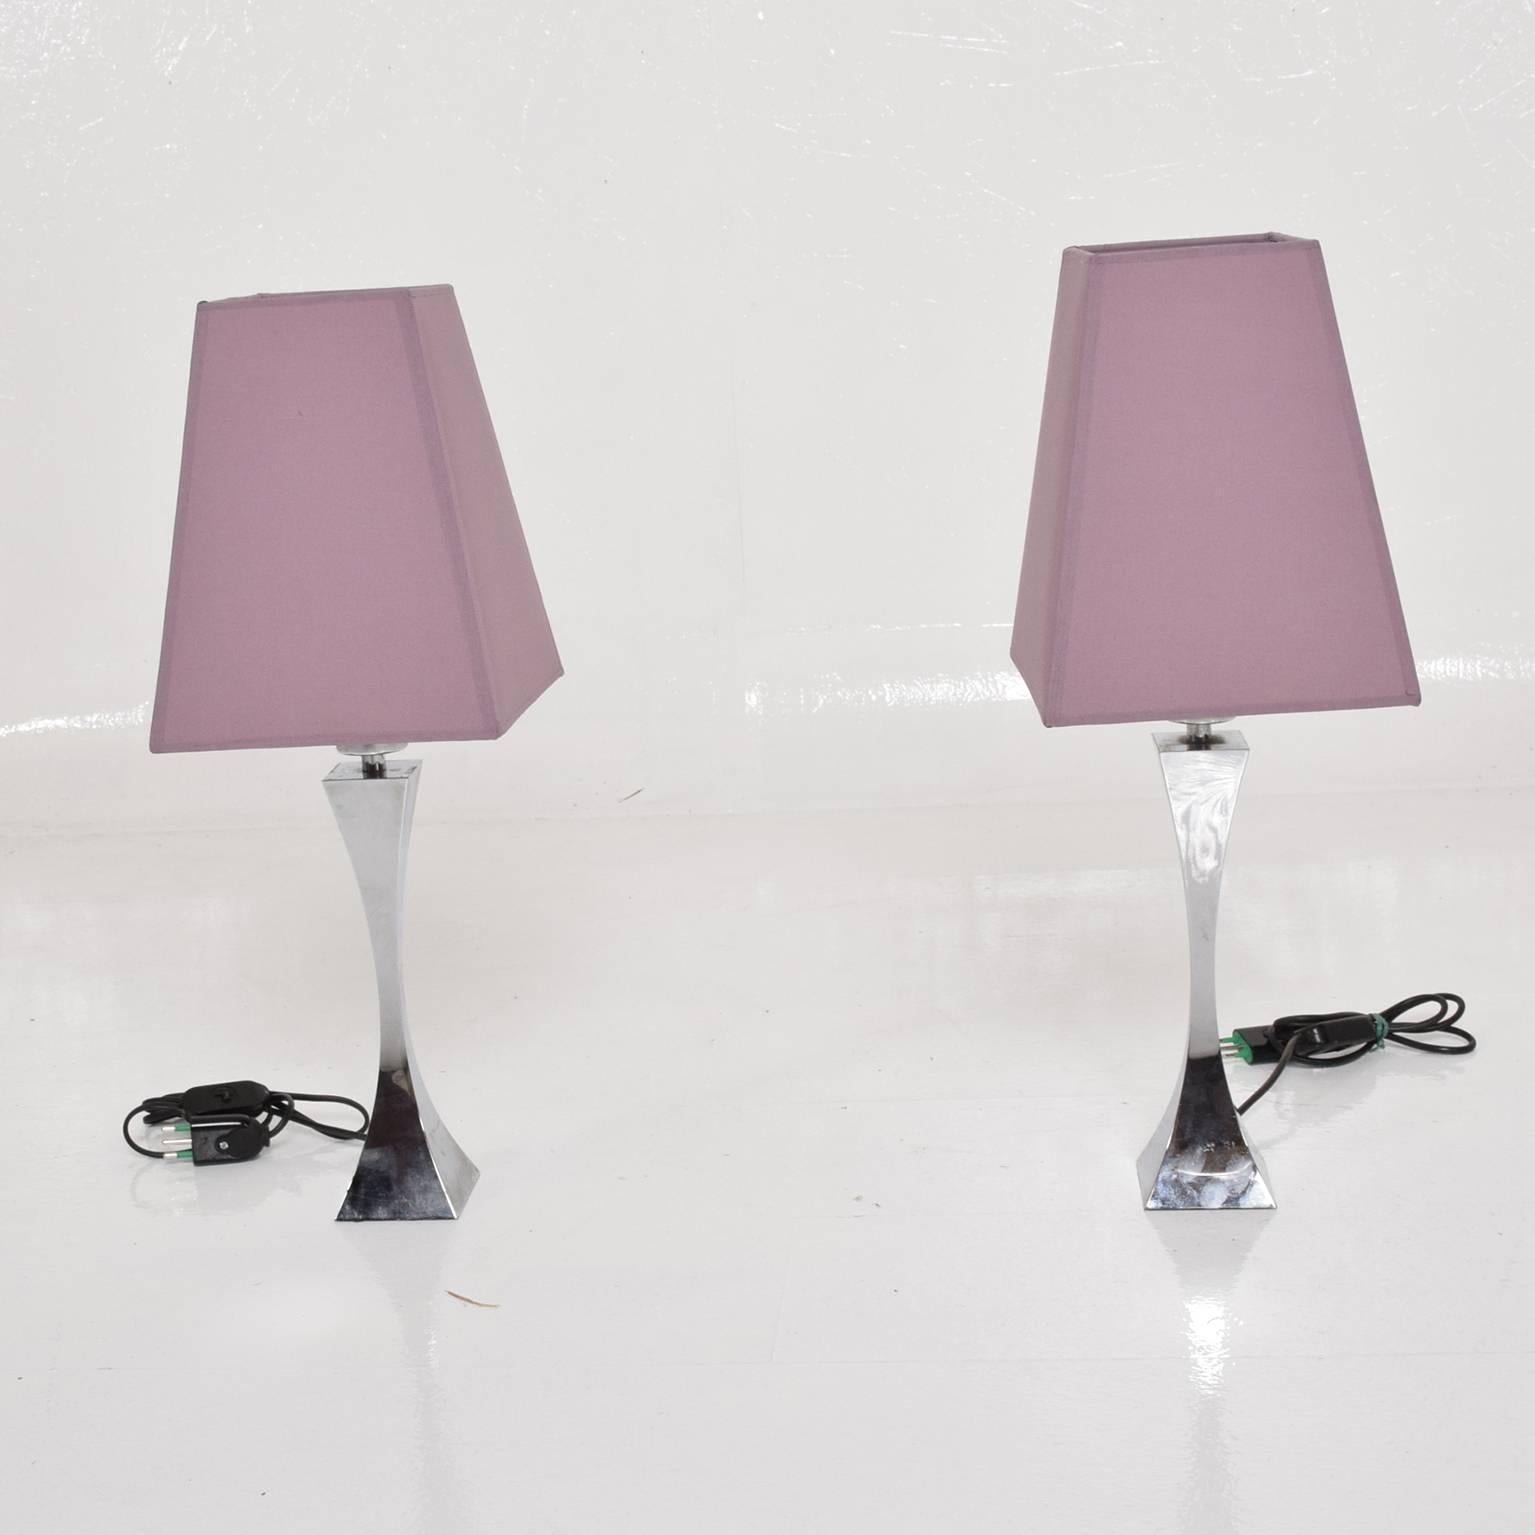 Mid-Century Modern Pair of Italian Chrome Table Lamps by Tonello & Montagna Grillo, Midcentury Era